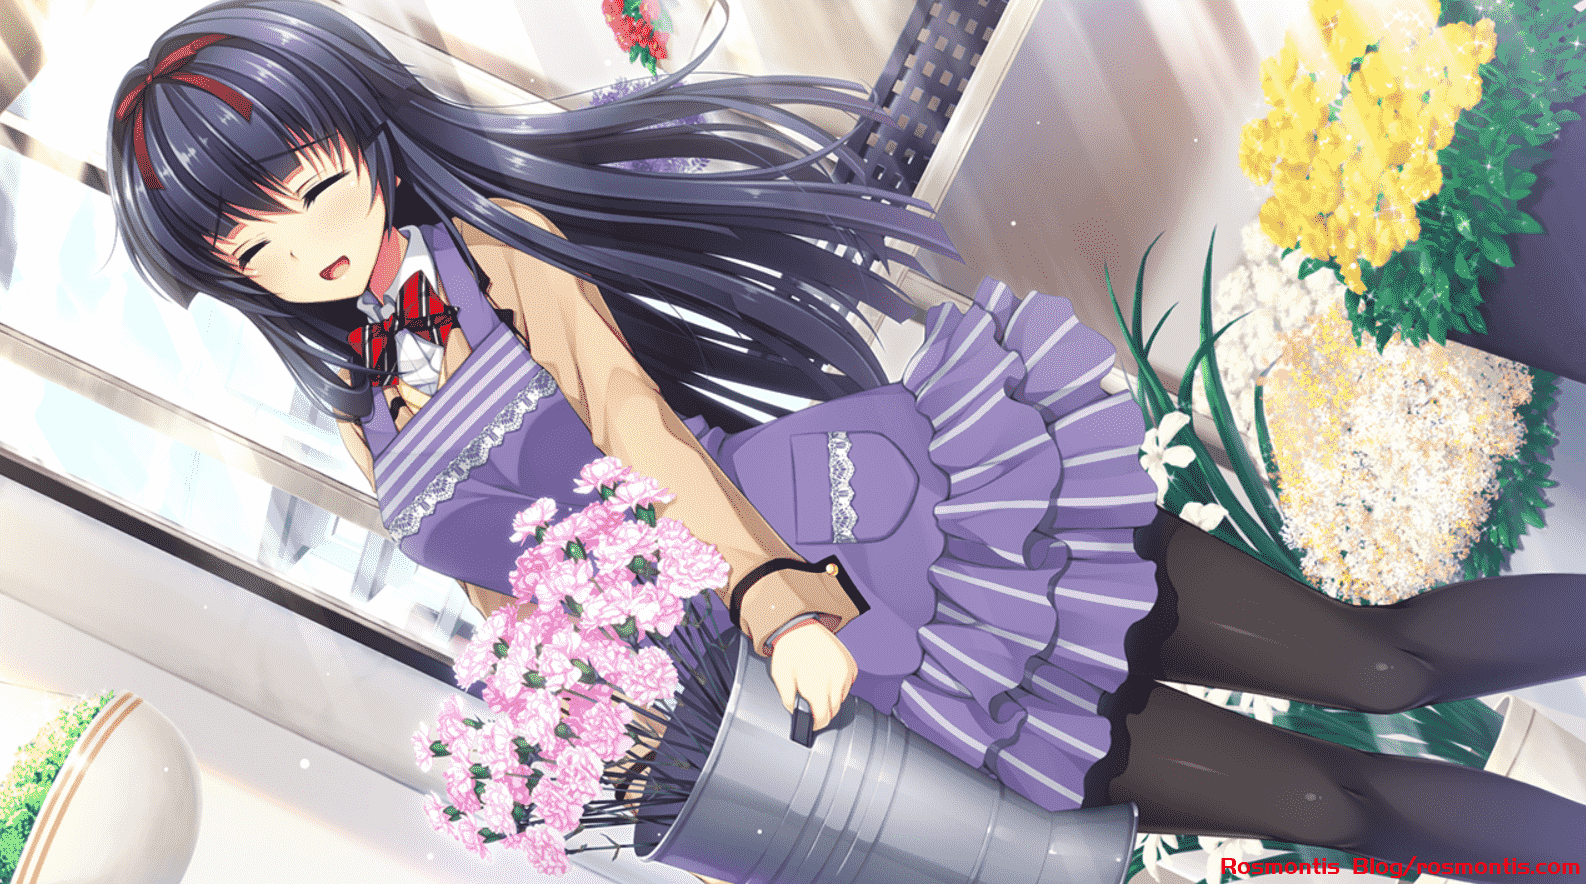 Lovely x Cation Image by Iizuki Tasuku #713091 - Zerochan Anime Image Board